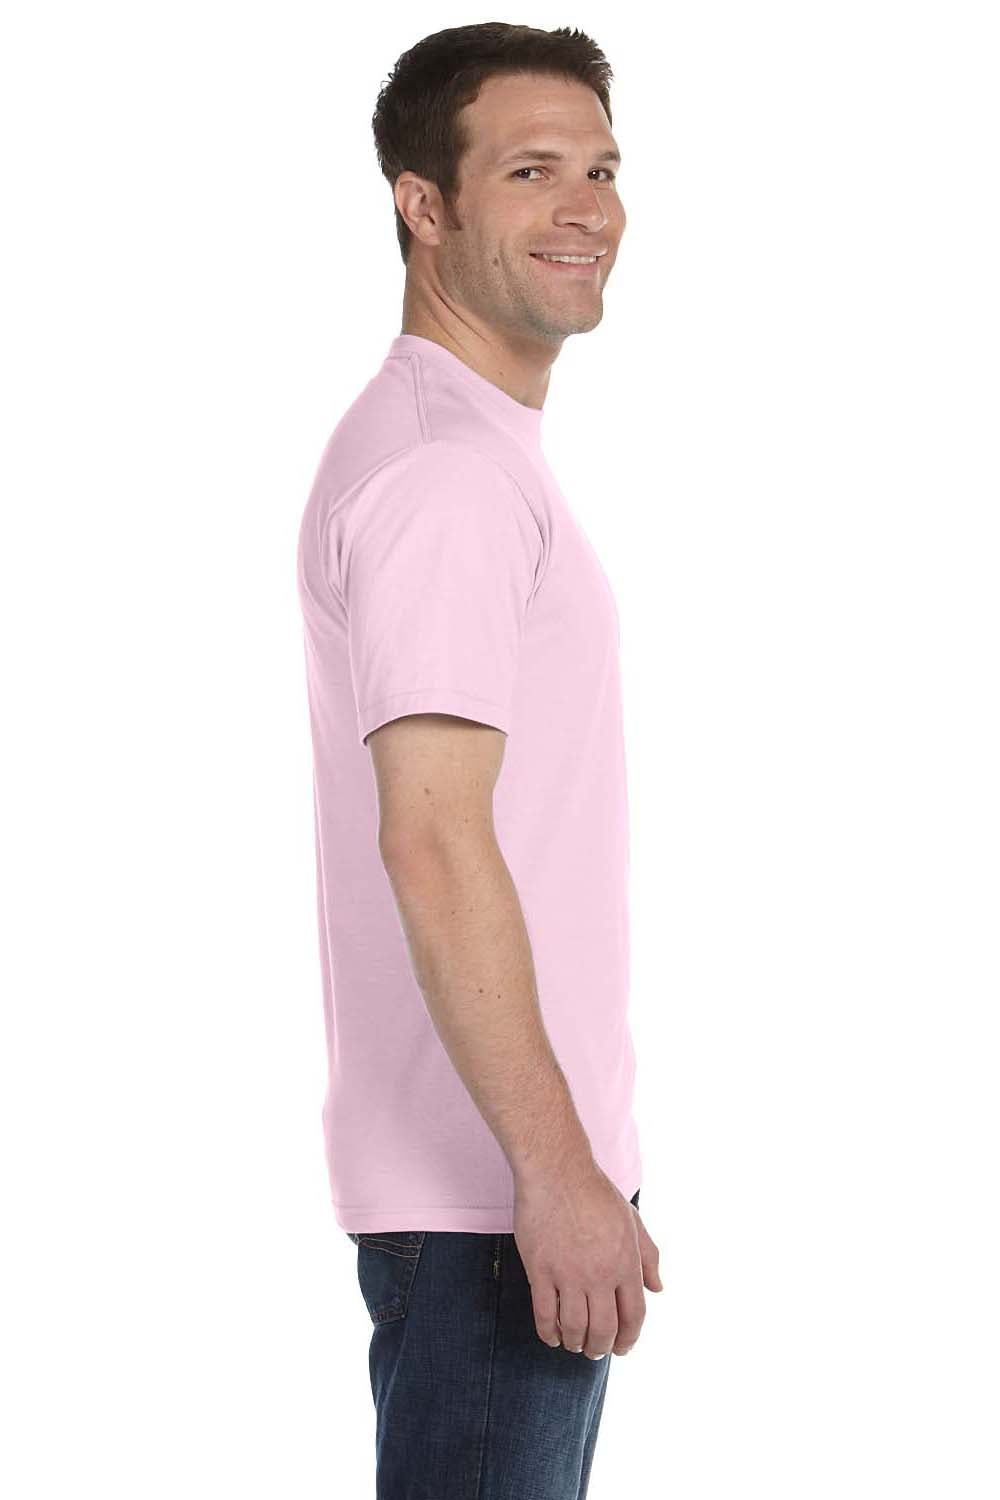 Hanes 5280 Mens ComfortSoft Short Sleeve Crewneck T-Shirt Pale Pink Side